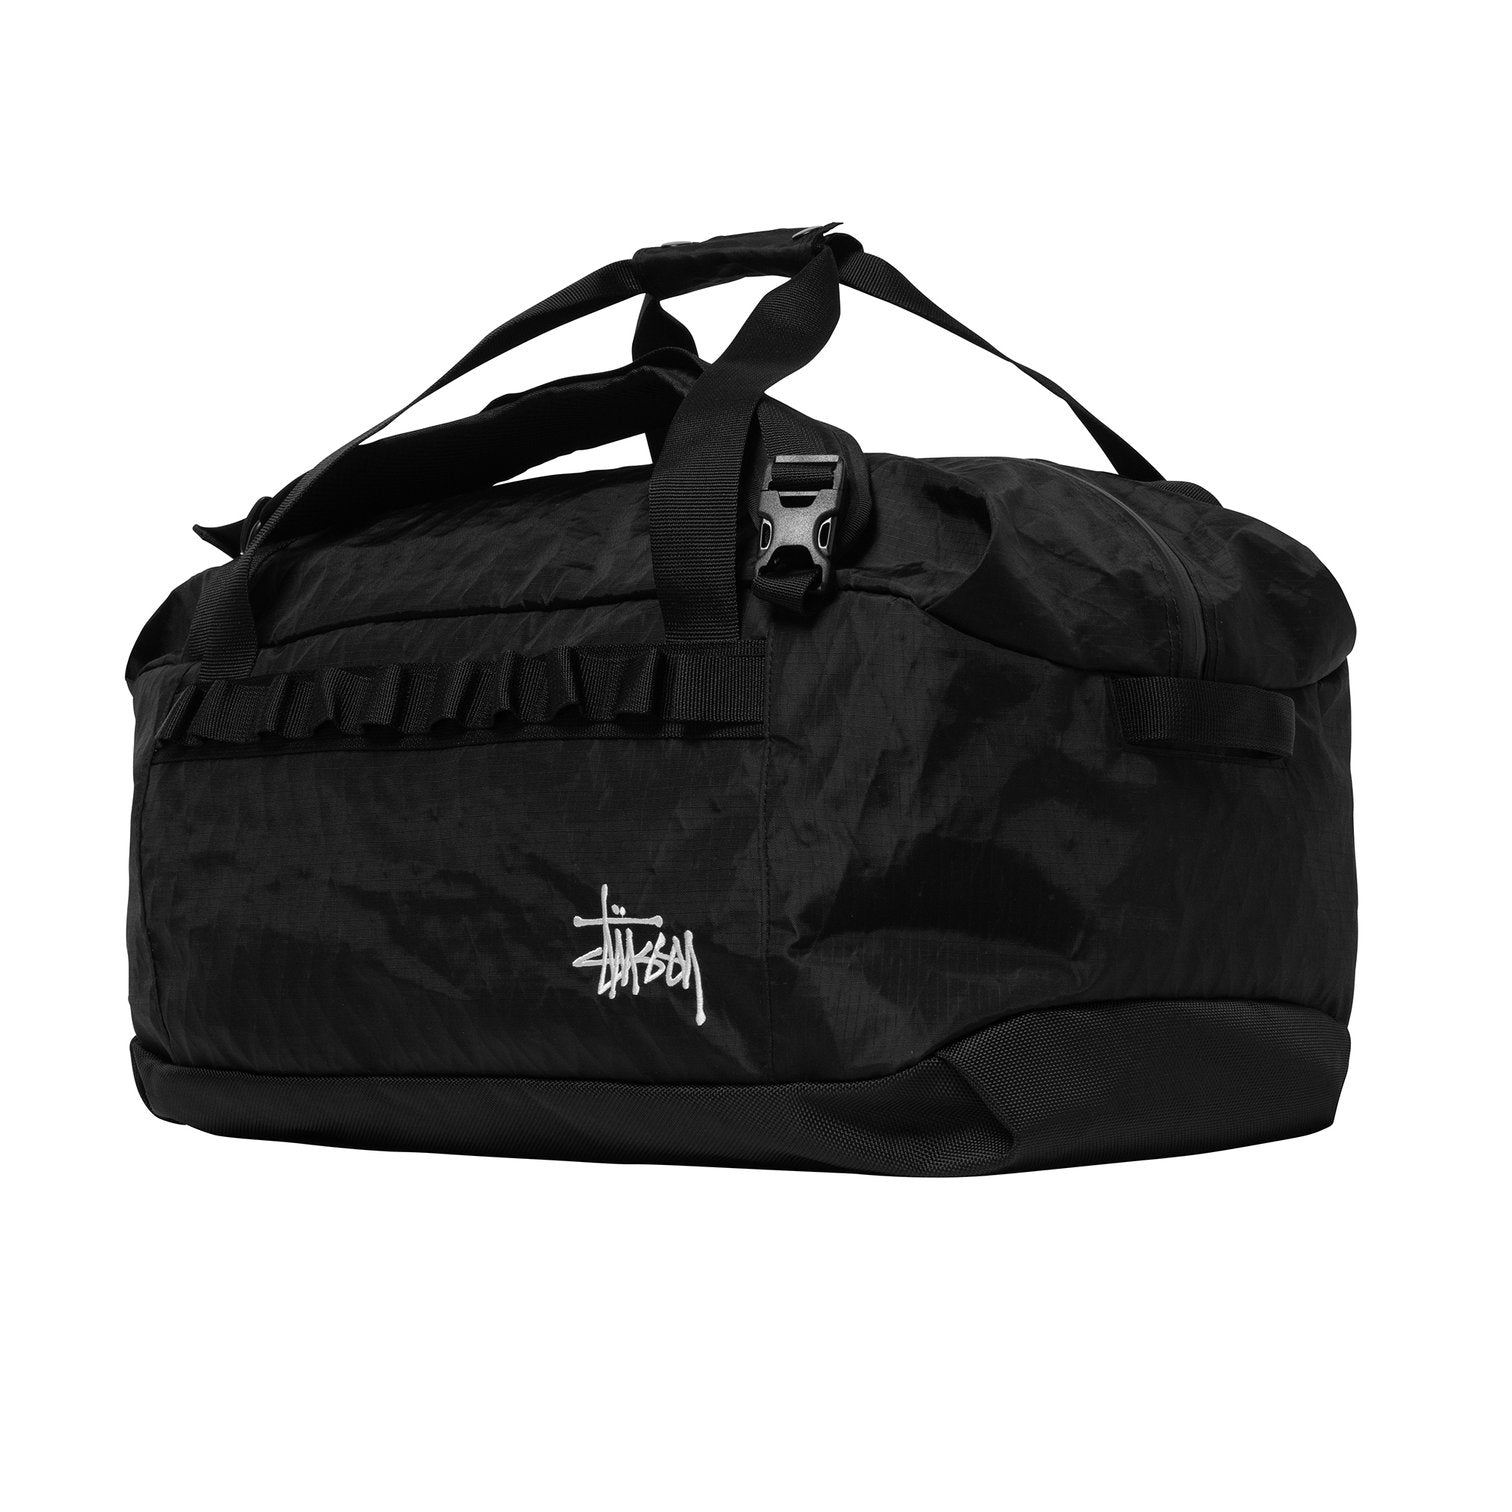 55L Duffle Bag Black